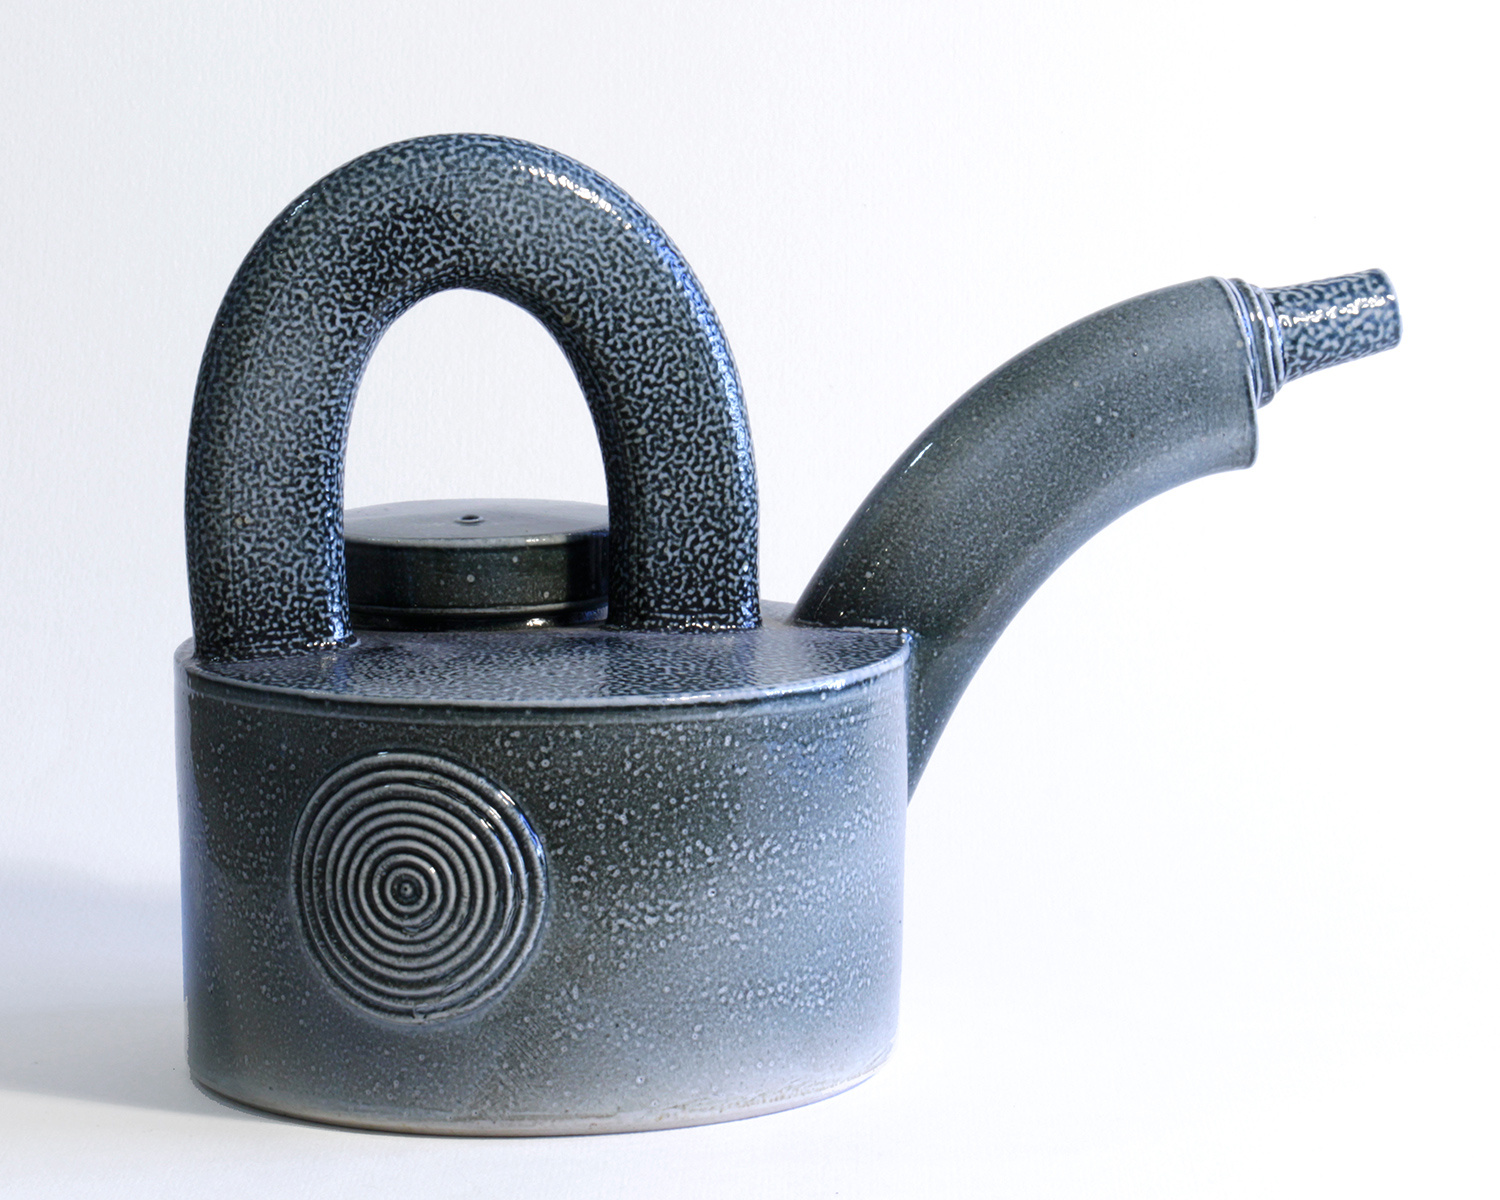 Oval Spout Teapot by Walter Keeler